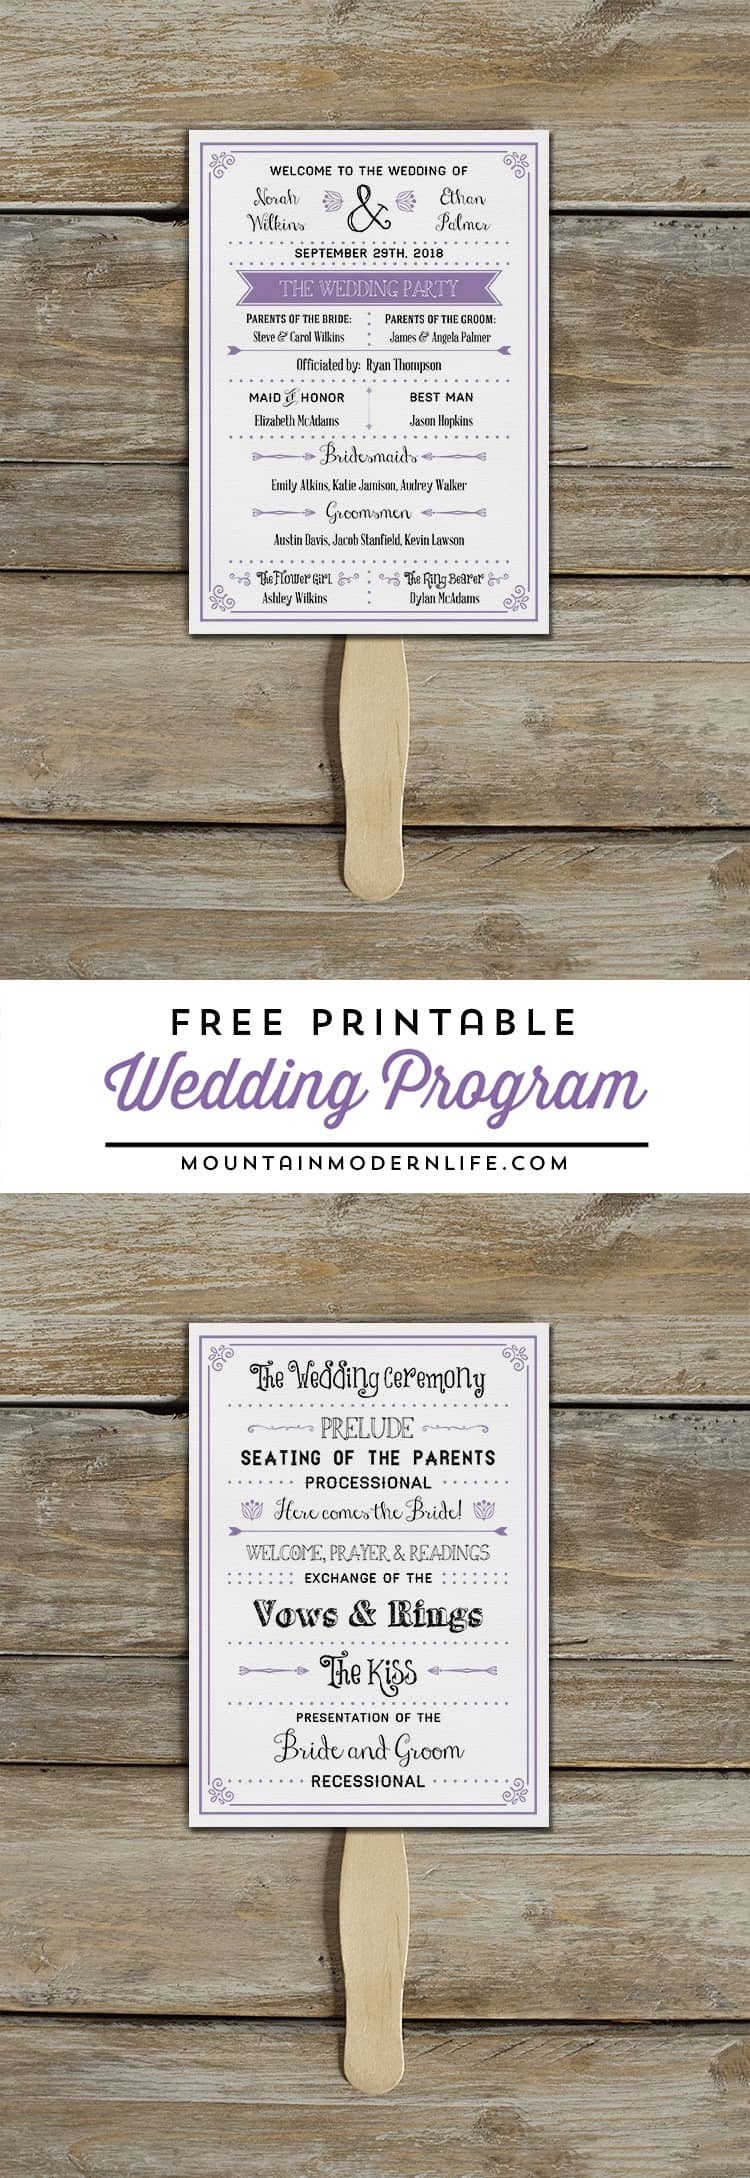 Templates for Wedding Programs Free Printable Wedding Program